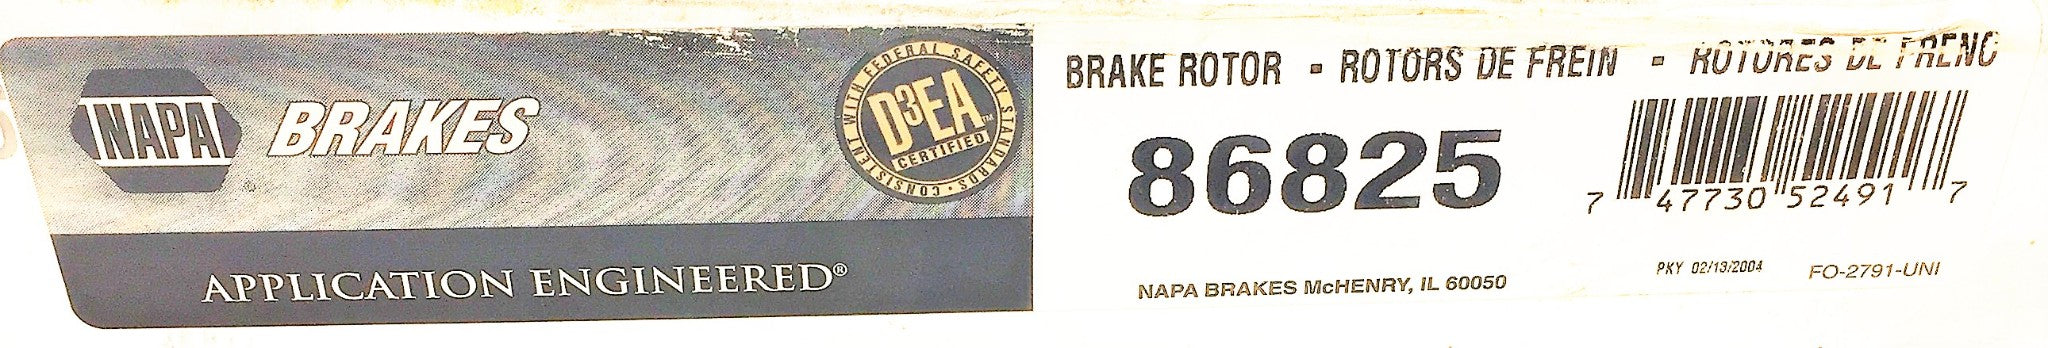 NAPA BRAKES Application Engineered Brake Rotor 86825 NOS